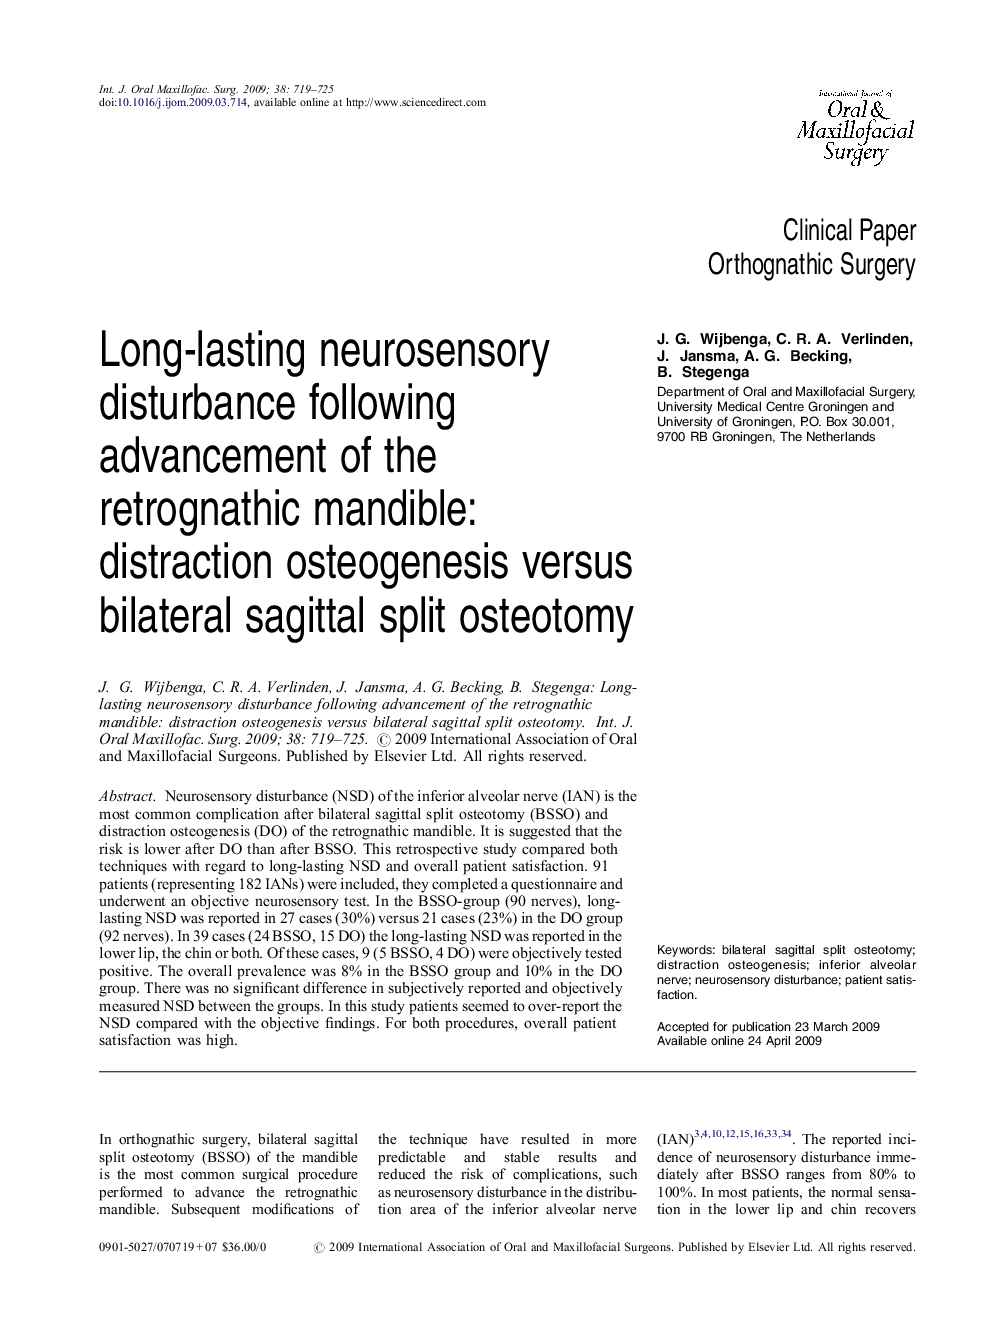 Long-lasting neurosensory disturbance following advancement of the retrognathic mandible: distraction osteogenesis versus bilateral sagittal split osteotomy